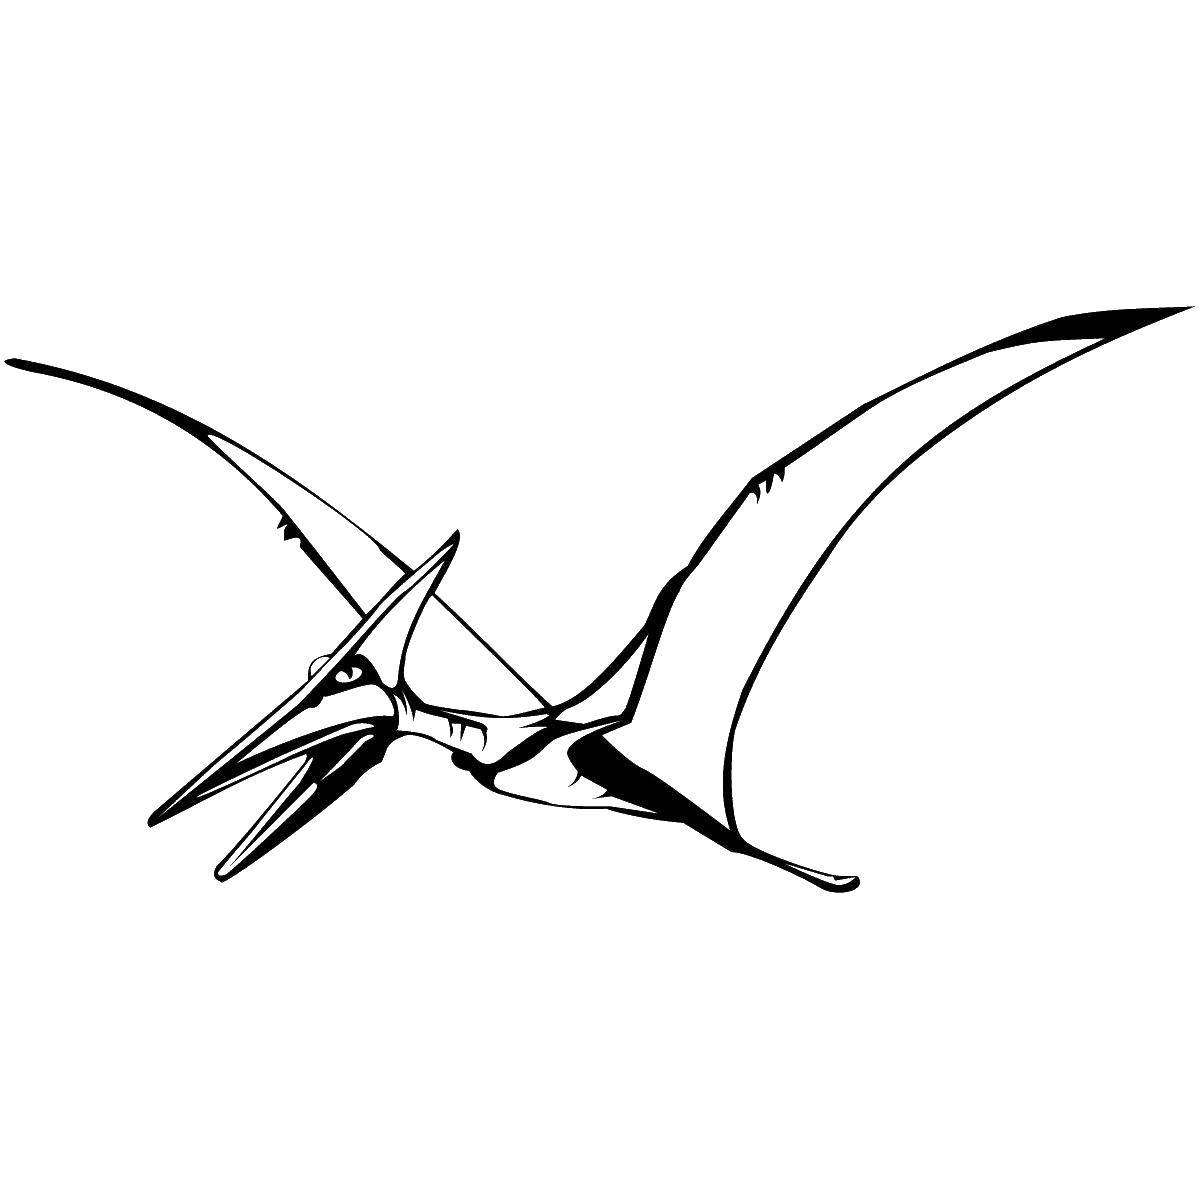 Coloring Pteranodon. Category dinosaur. Tags:  Dinosaurs , Pteranodon, flying.